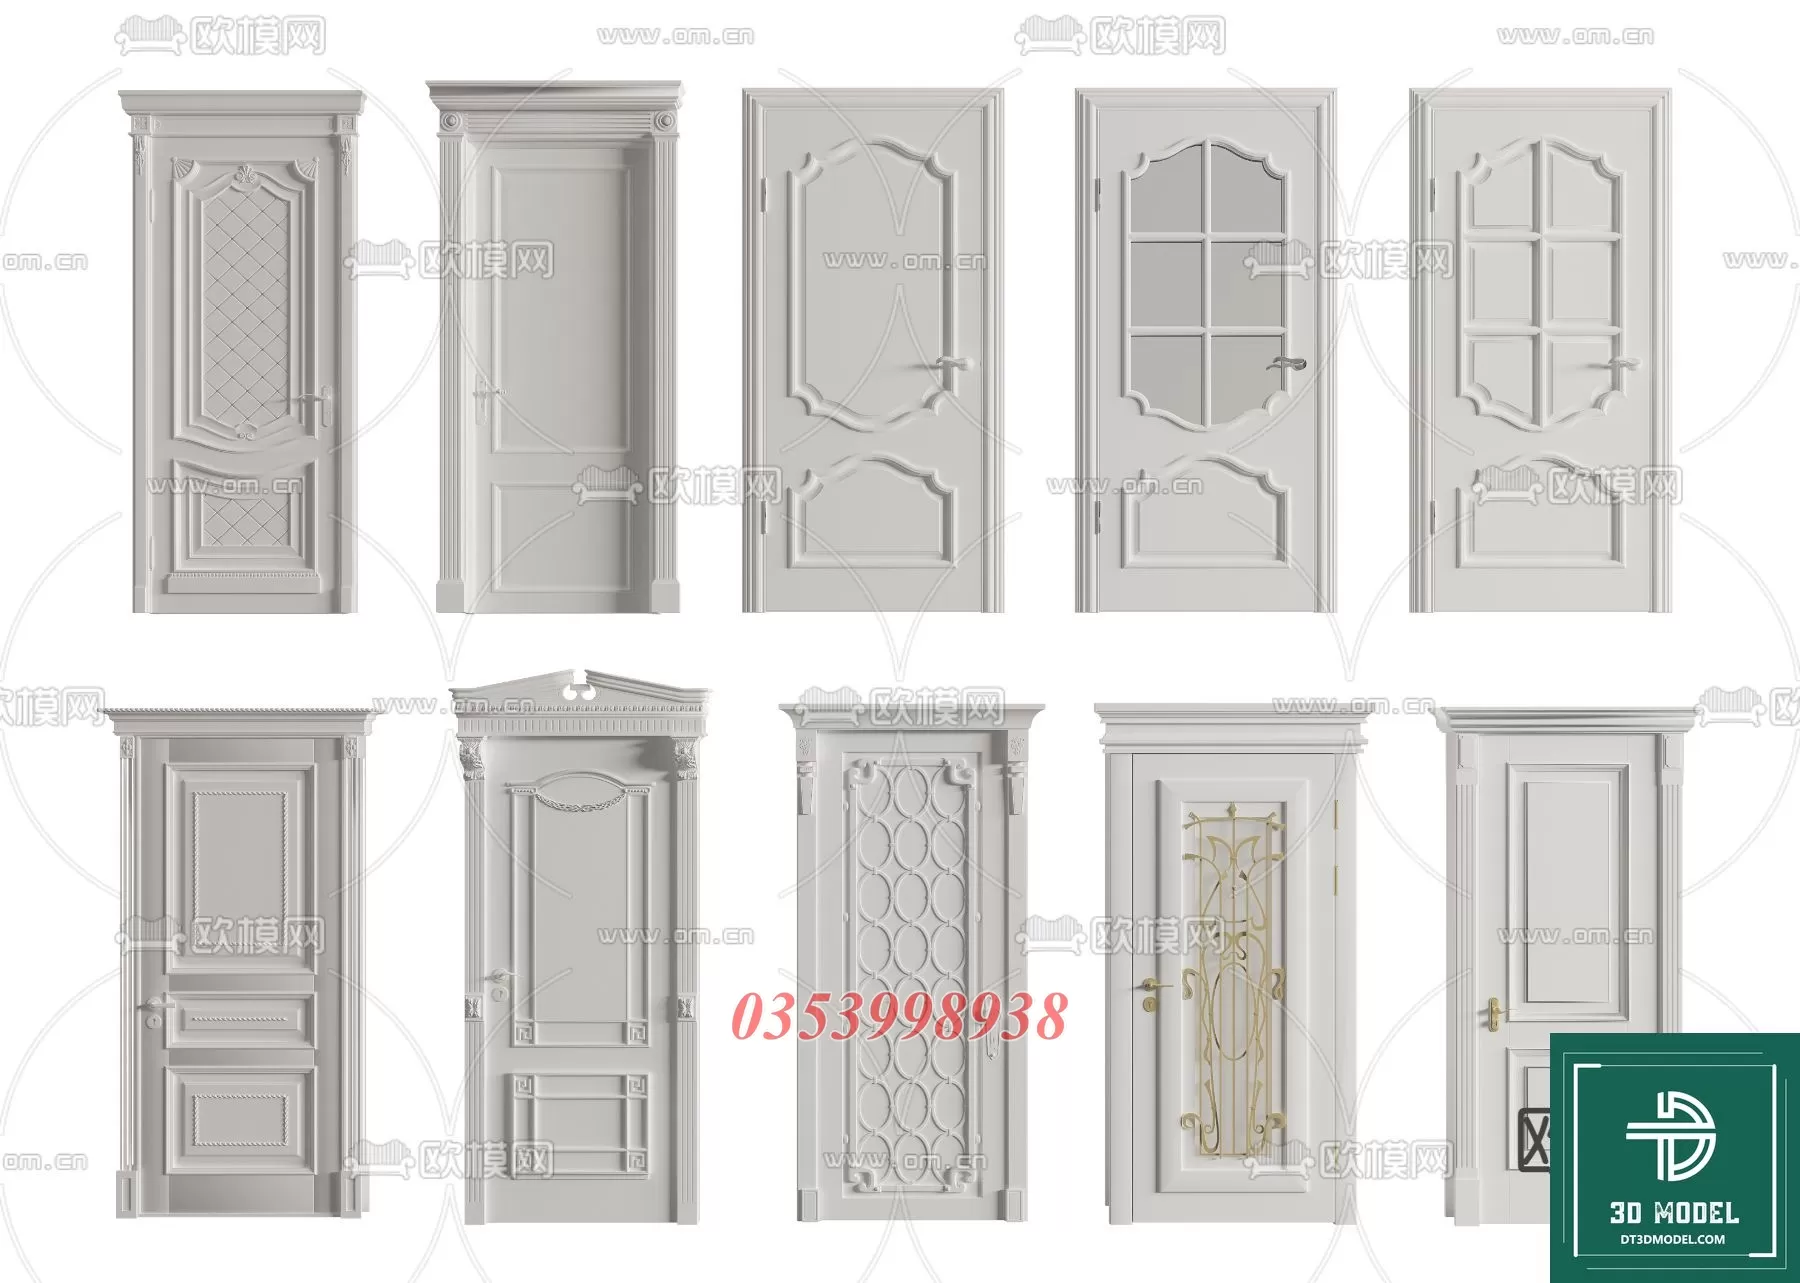 CLASSIC DOOR – 3DSKY MODELS – 118